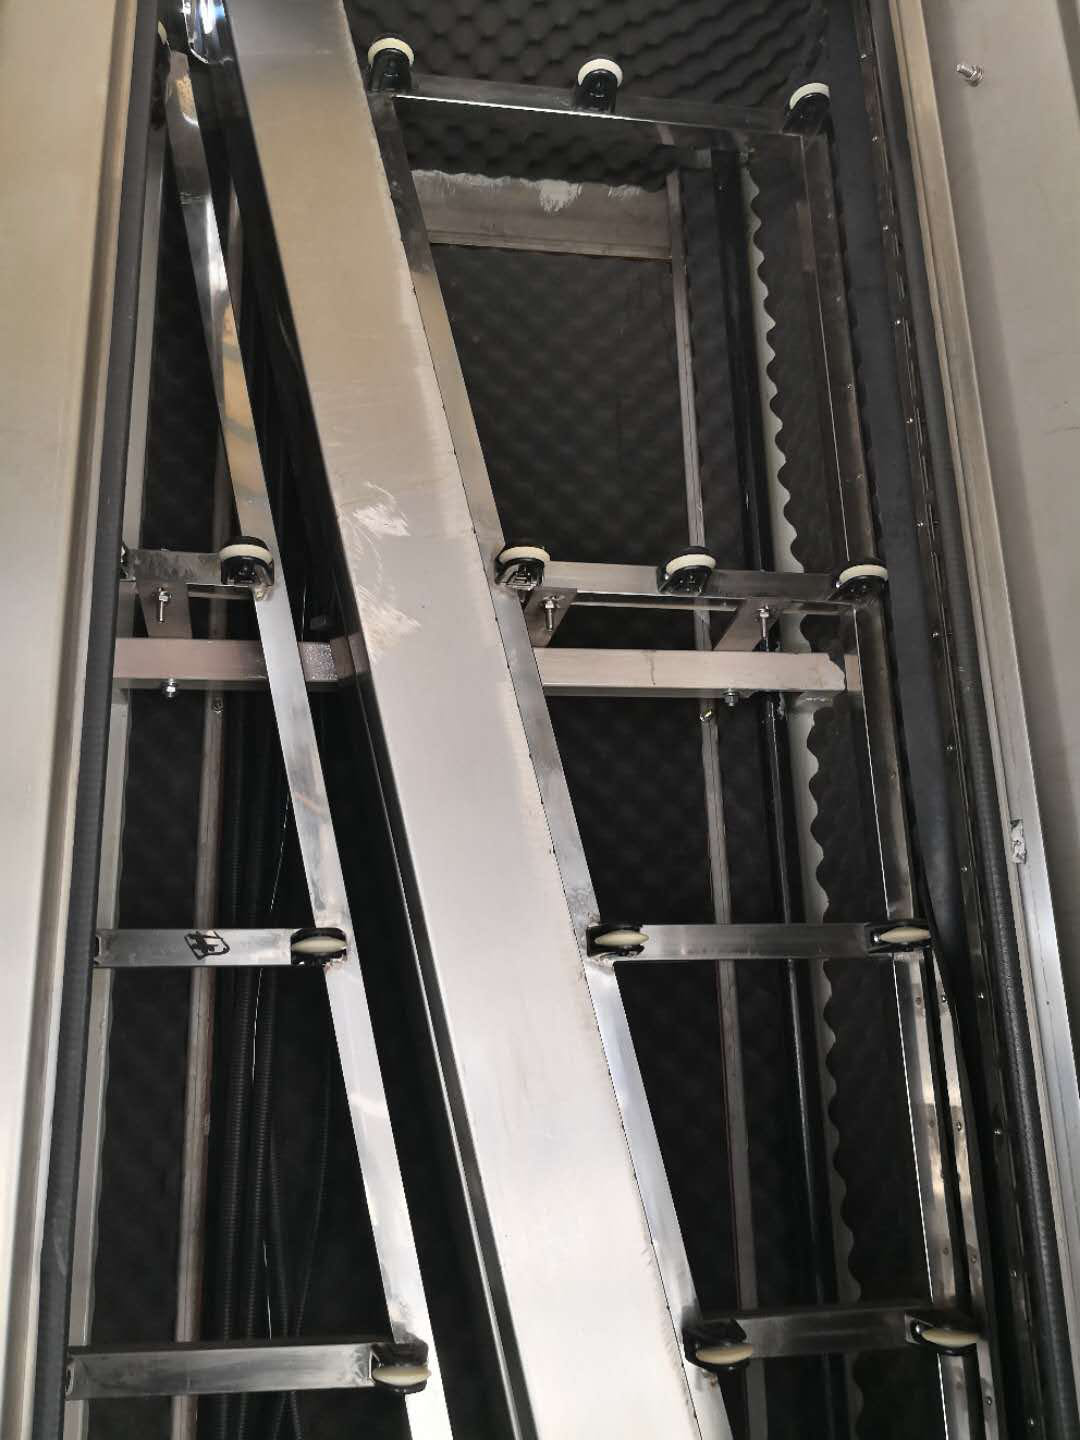 Figure 3 The wind knife of LIJIANG vertical glass washing machine